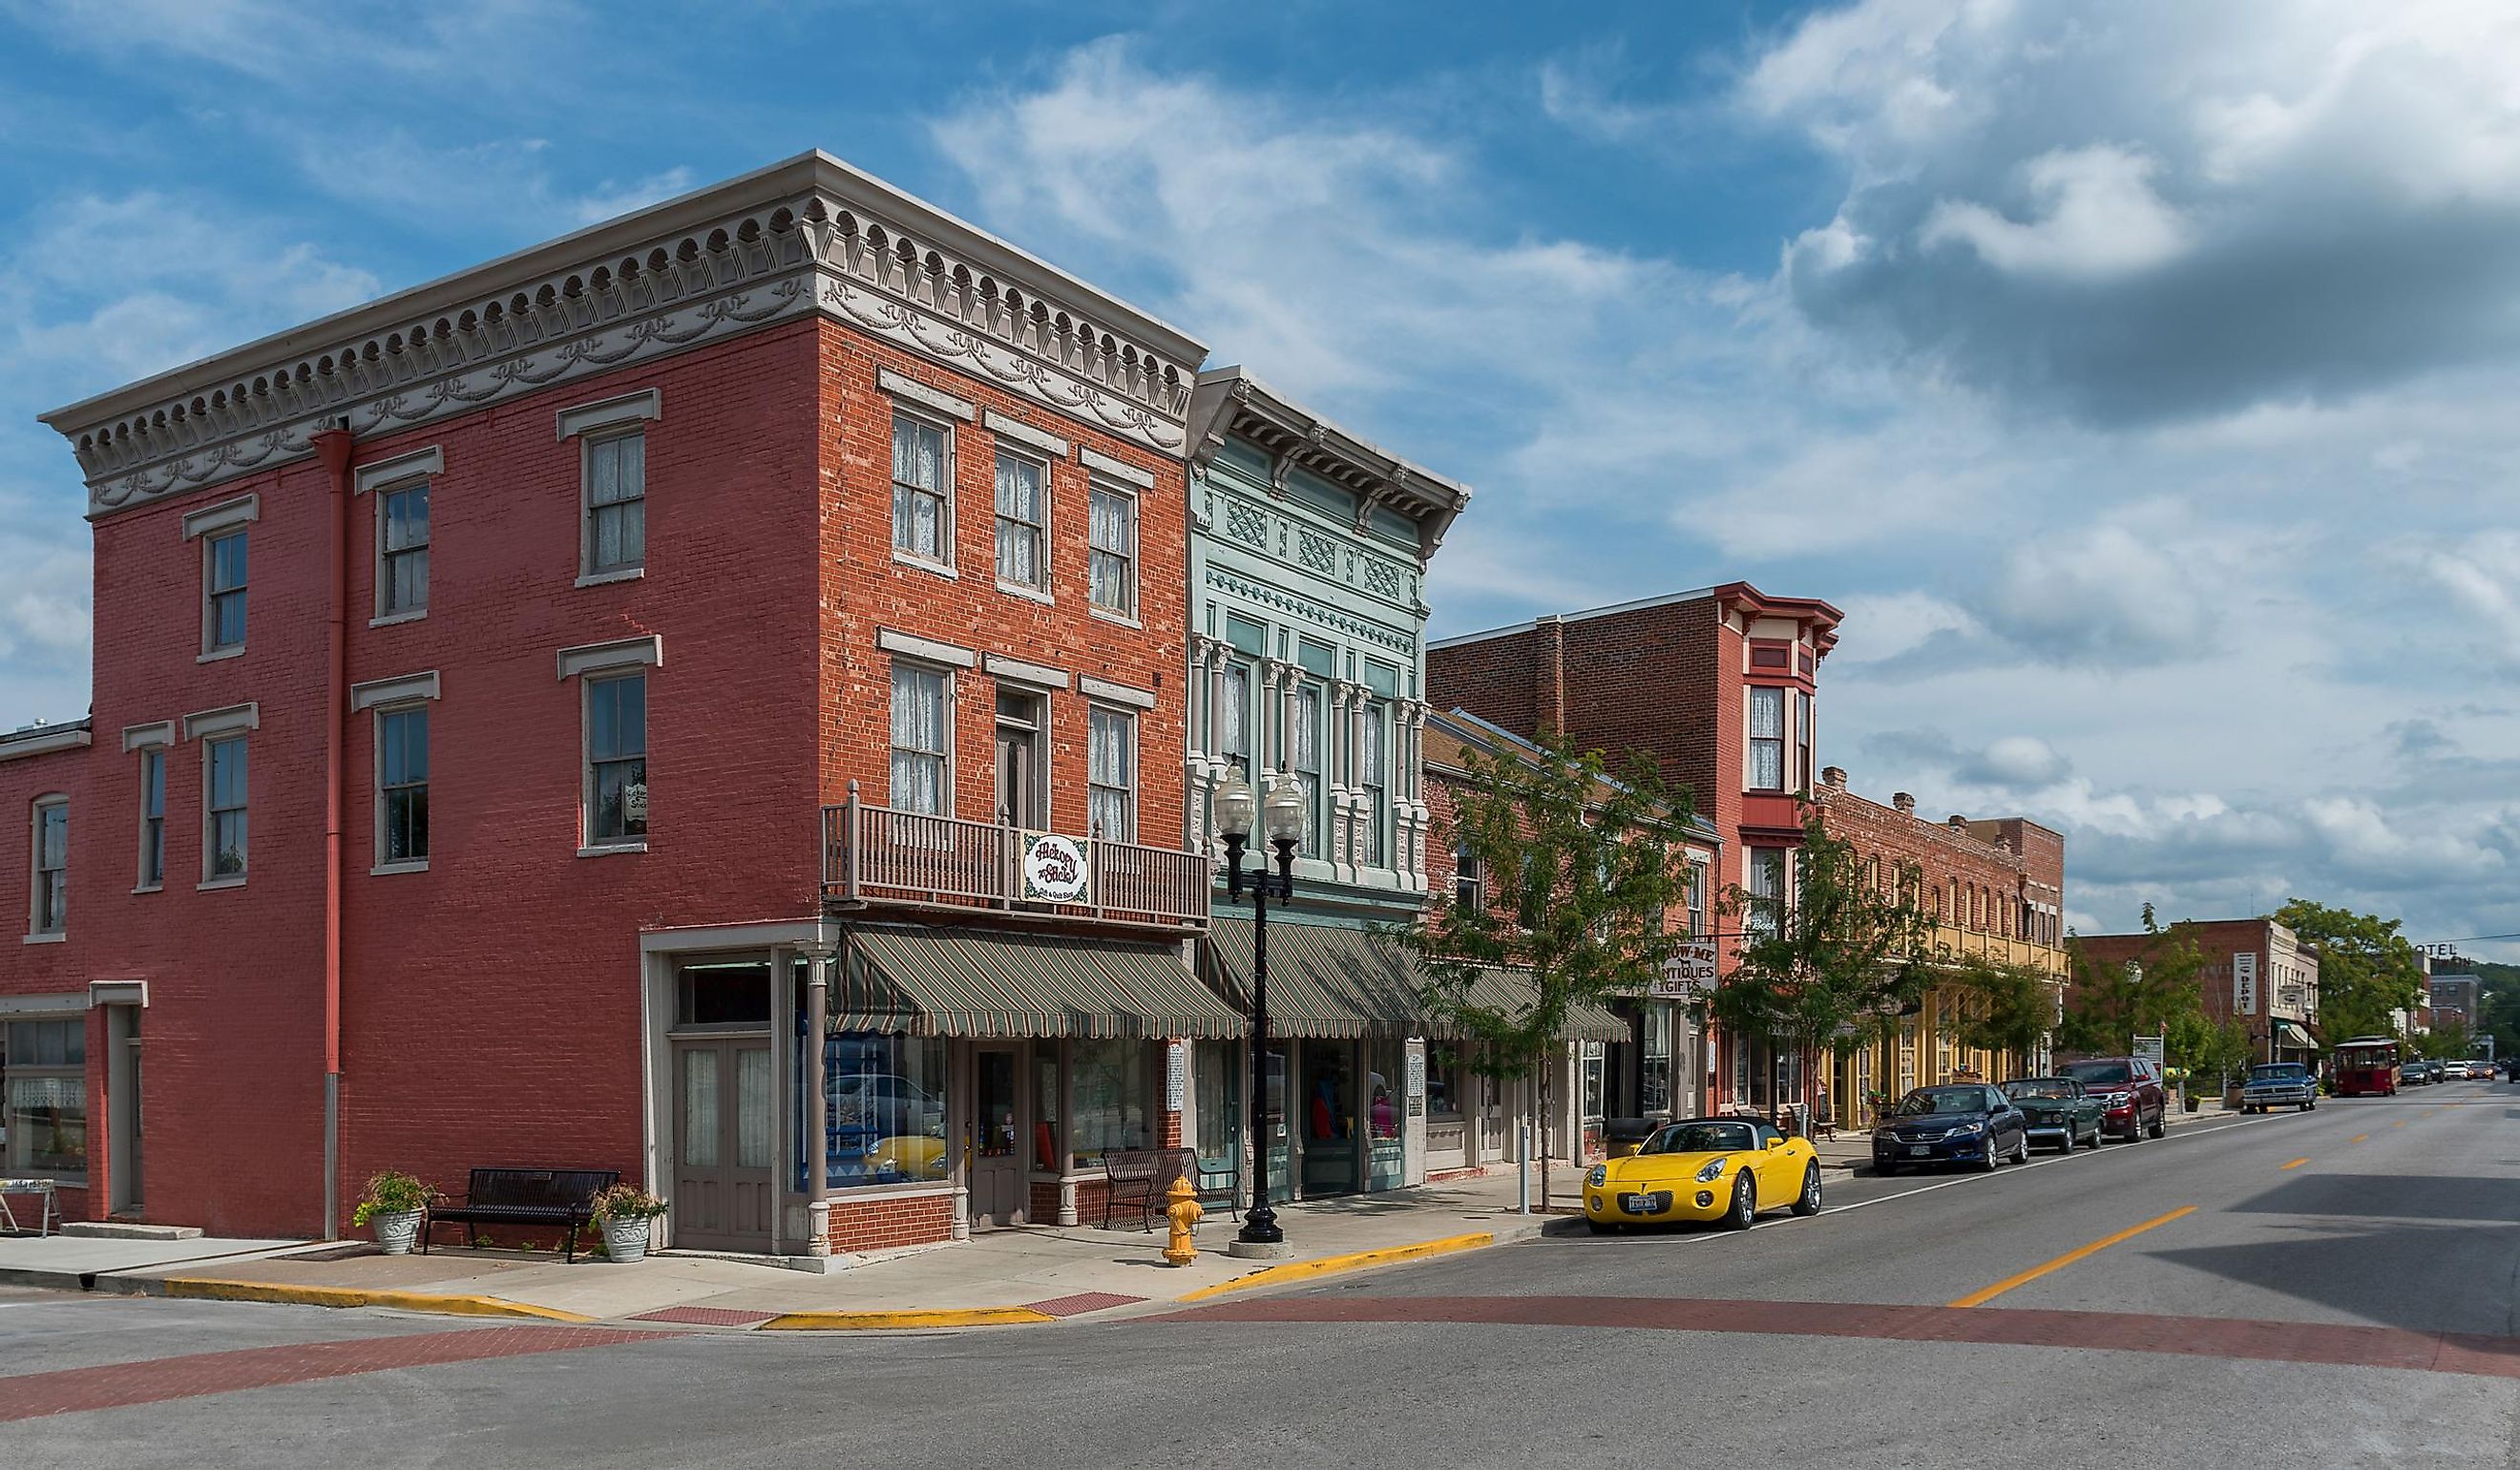 North Main Street Historic District in Hannibal, Missouri. Editorial credit: Nagel Photography / Shutterstock.com